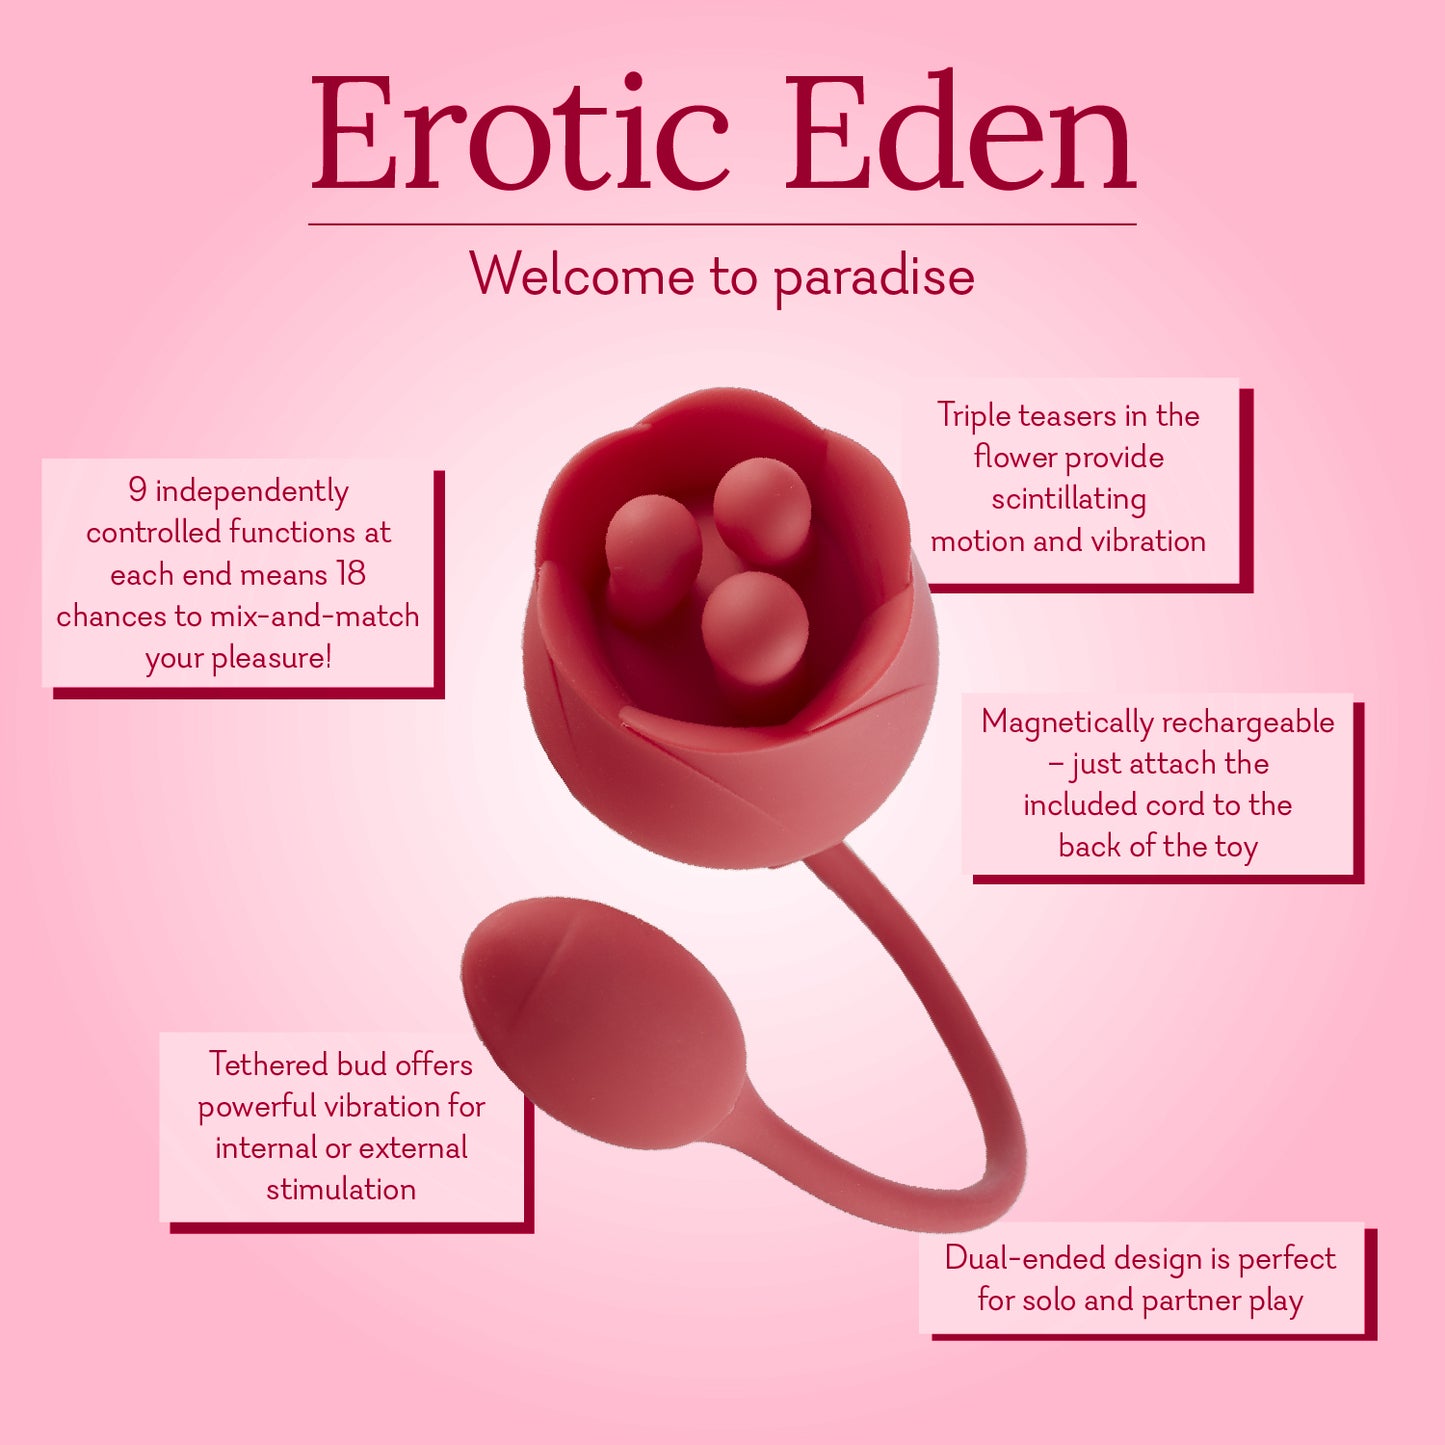 Erotic Eden Rose Vibrator Infographic Pure Romance